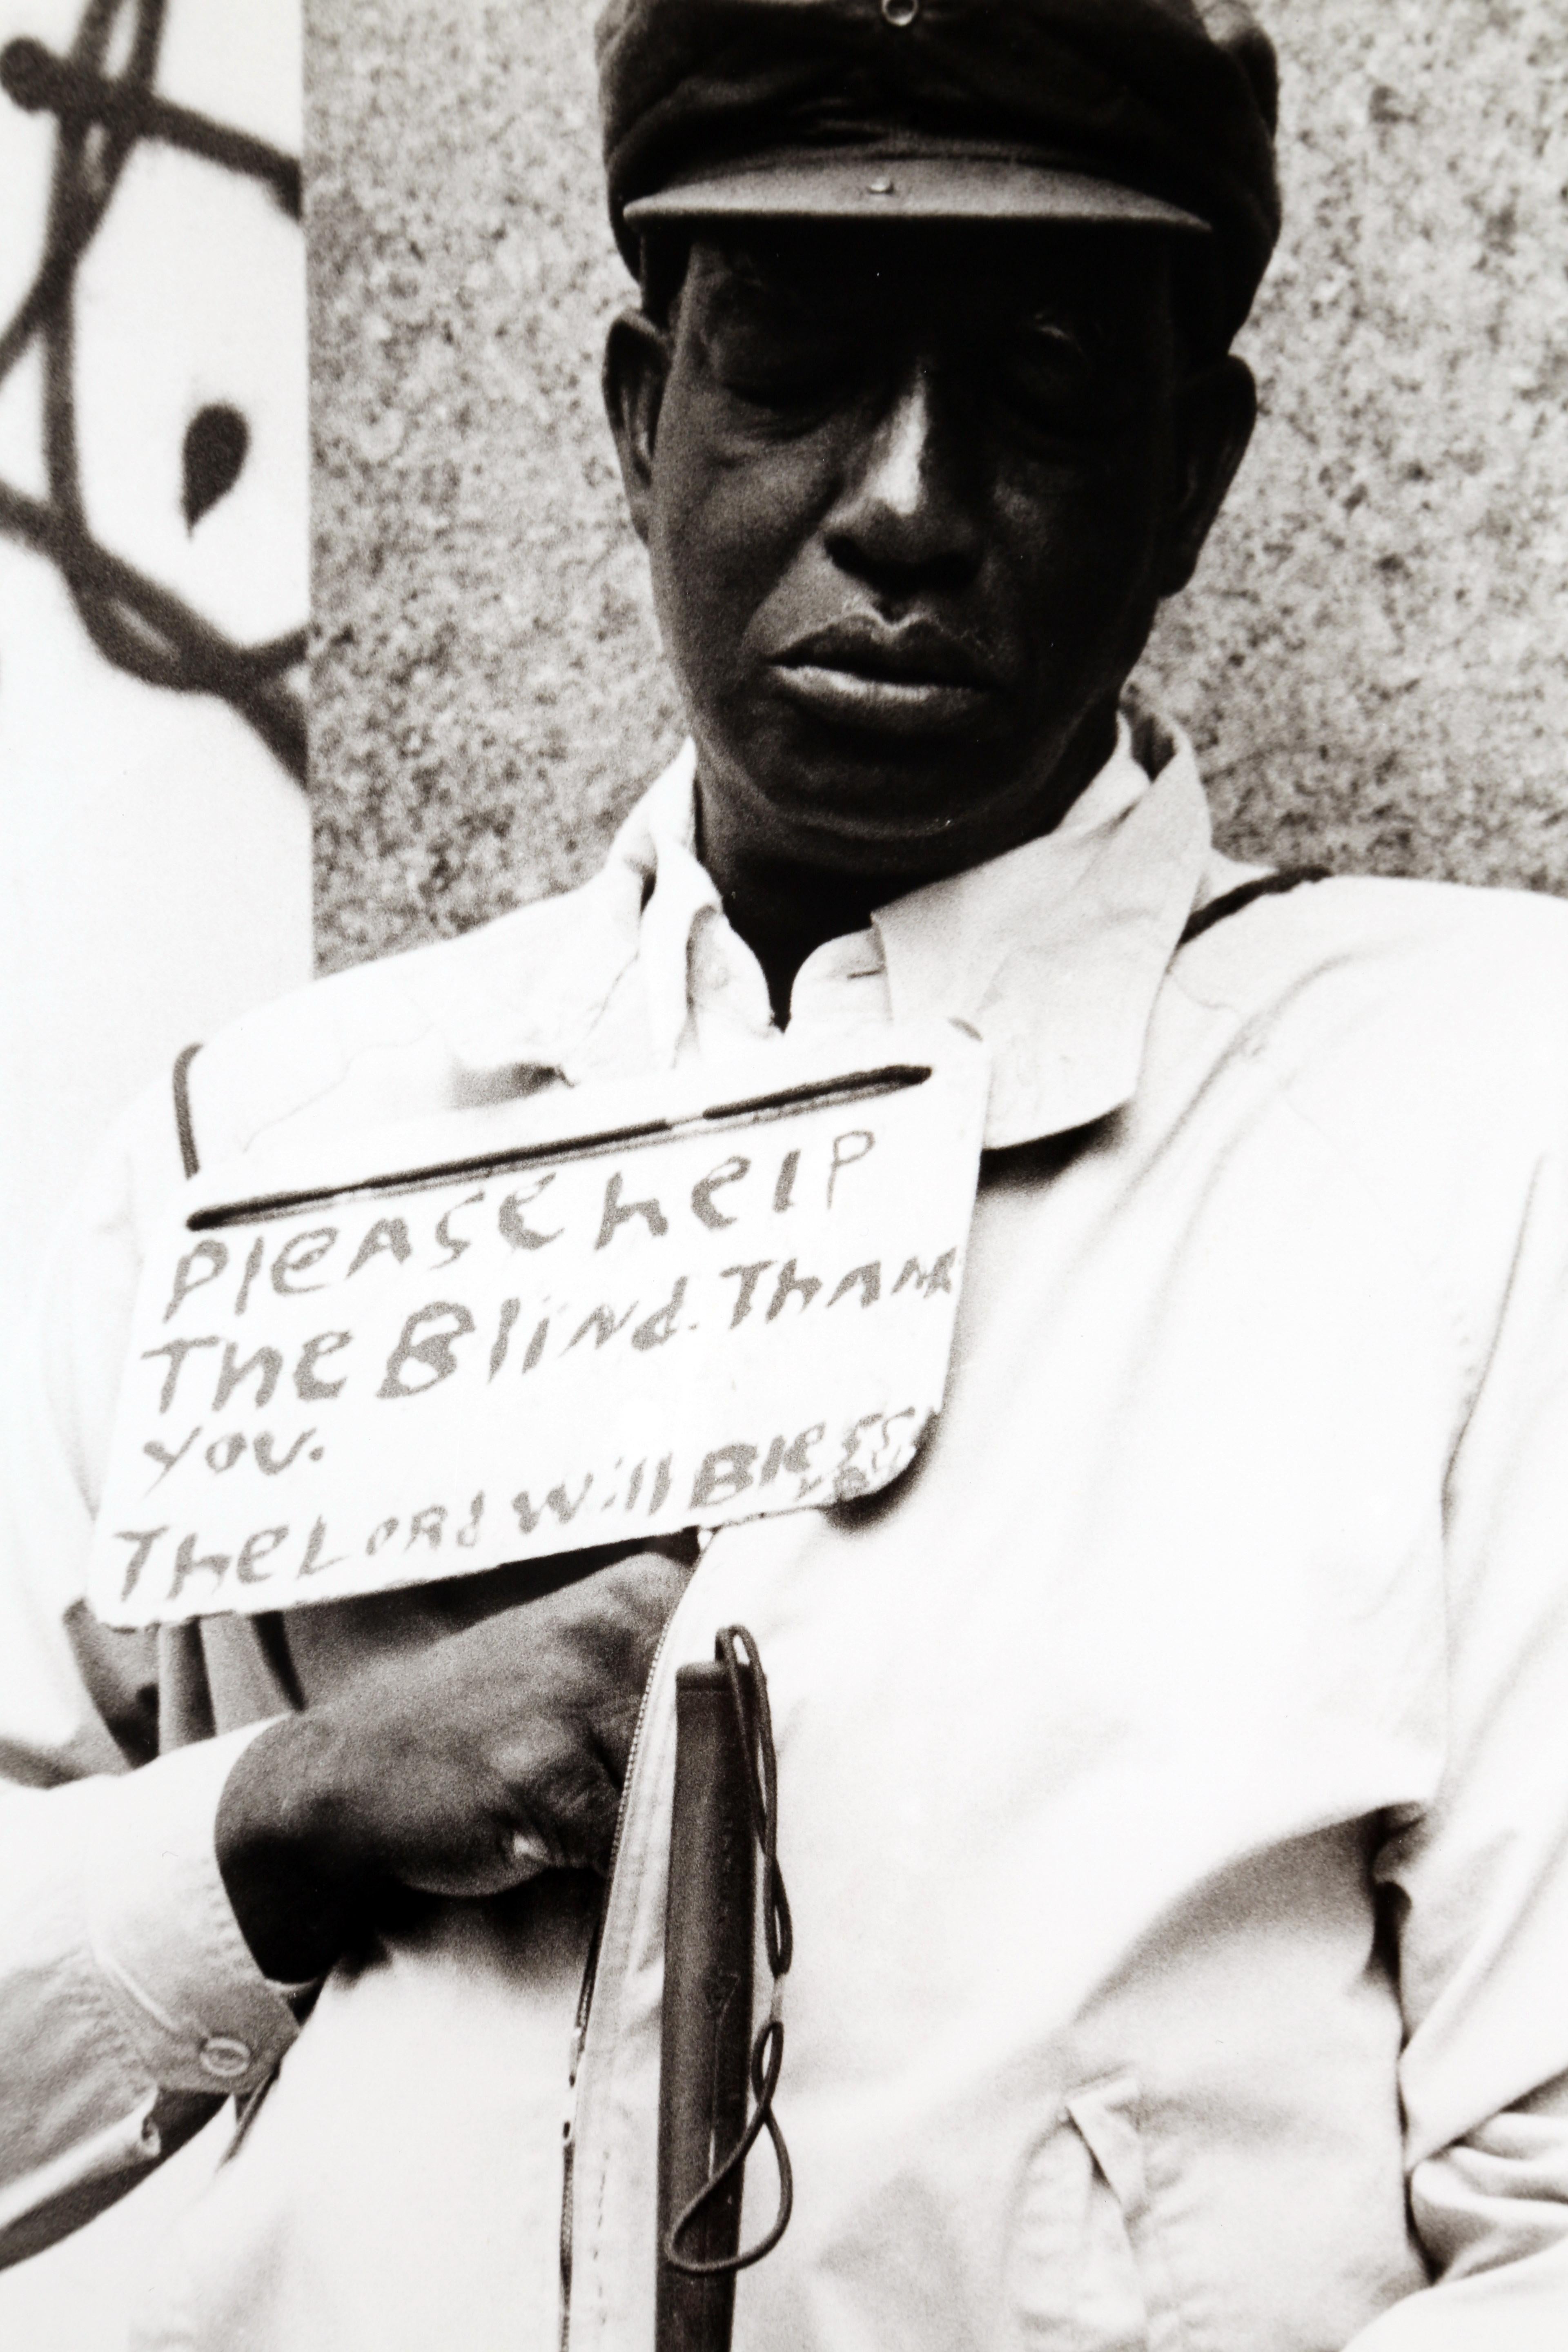 S. Vincent Dillard
Blind Beggar - Broadway & 34th St., New York City, 1992
Gelatin silver print
11 x 14 inches  (27.9 x 35.6 cm)